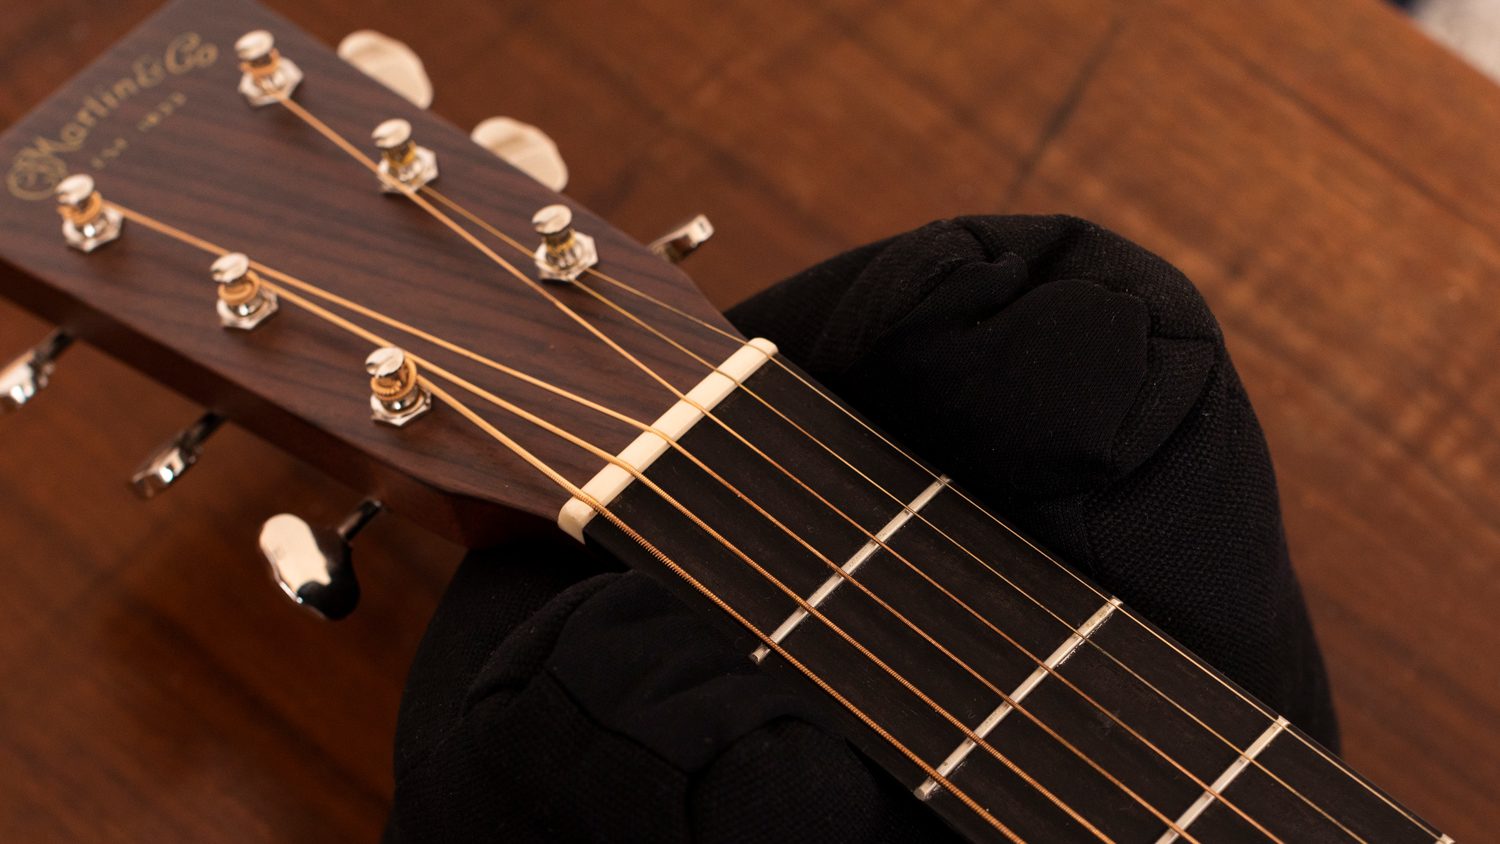 Martin Guitar Neck